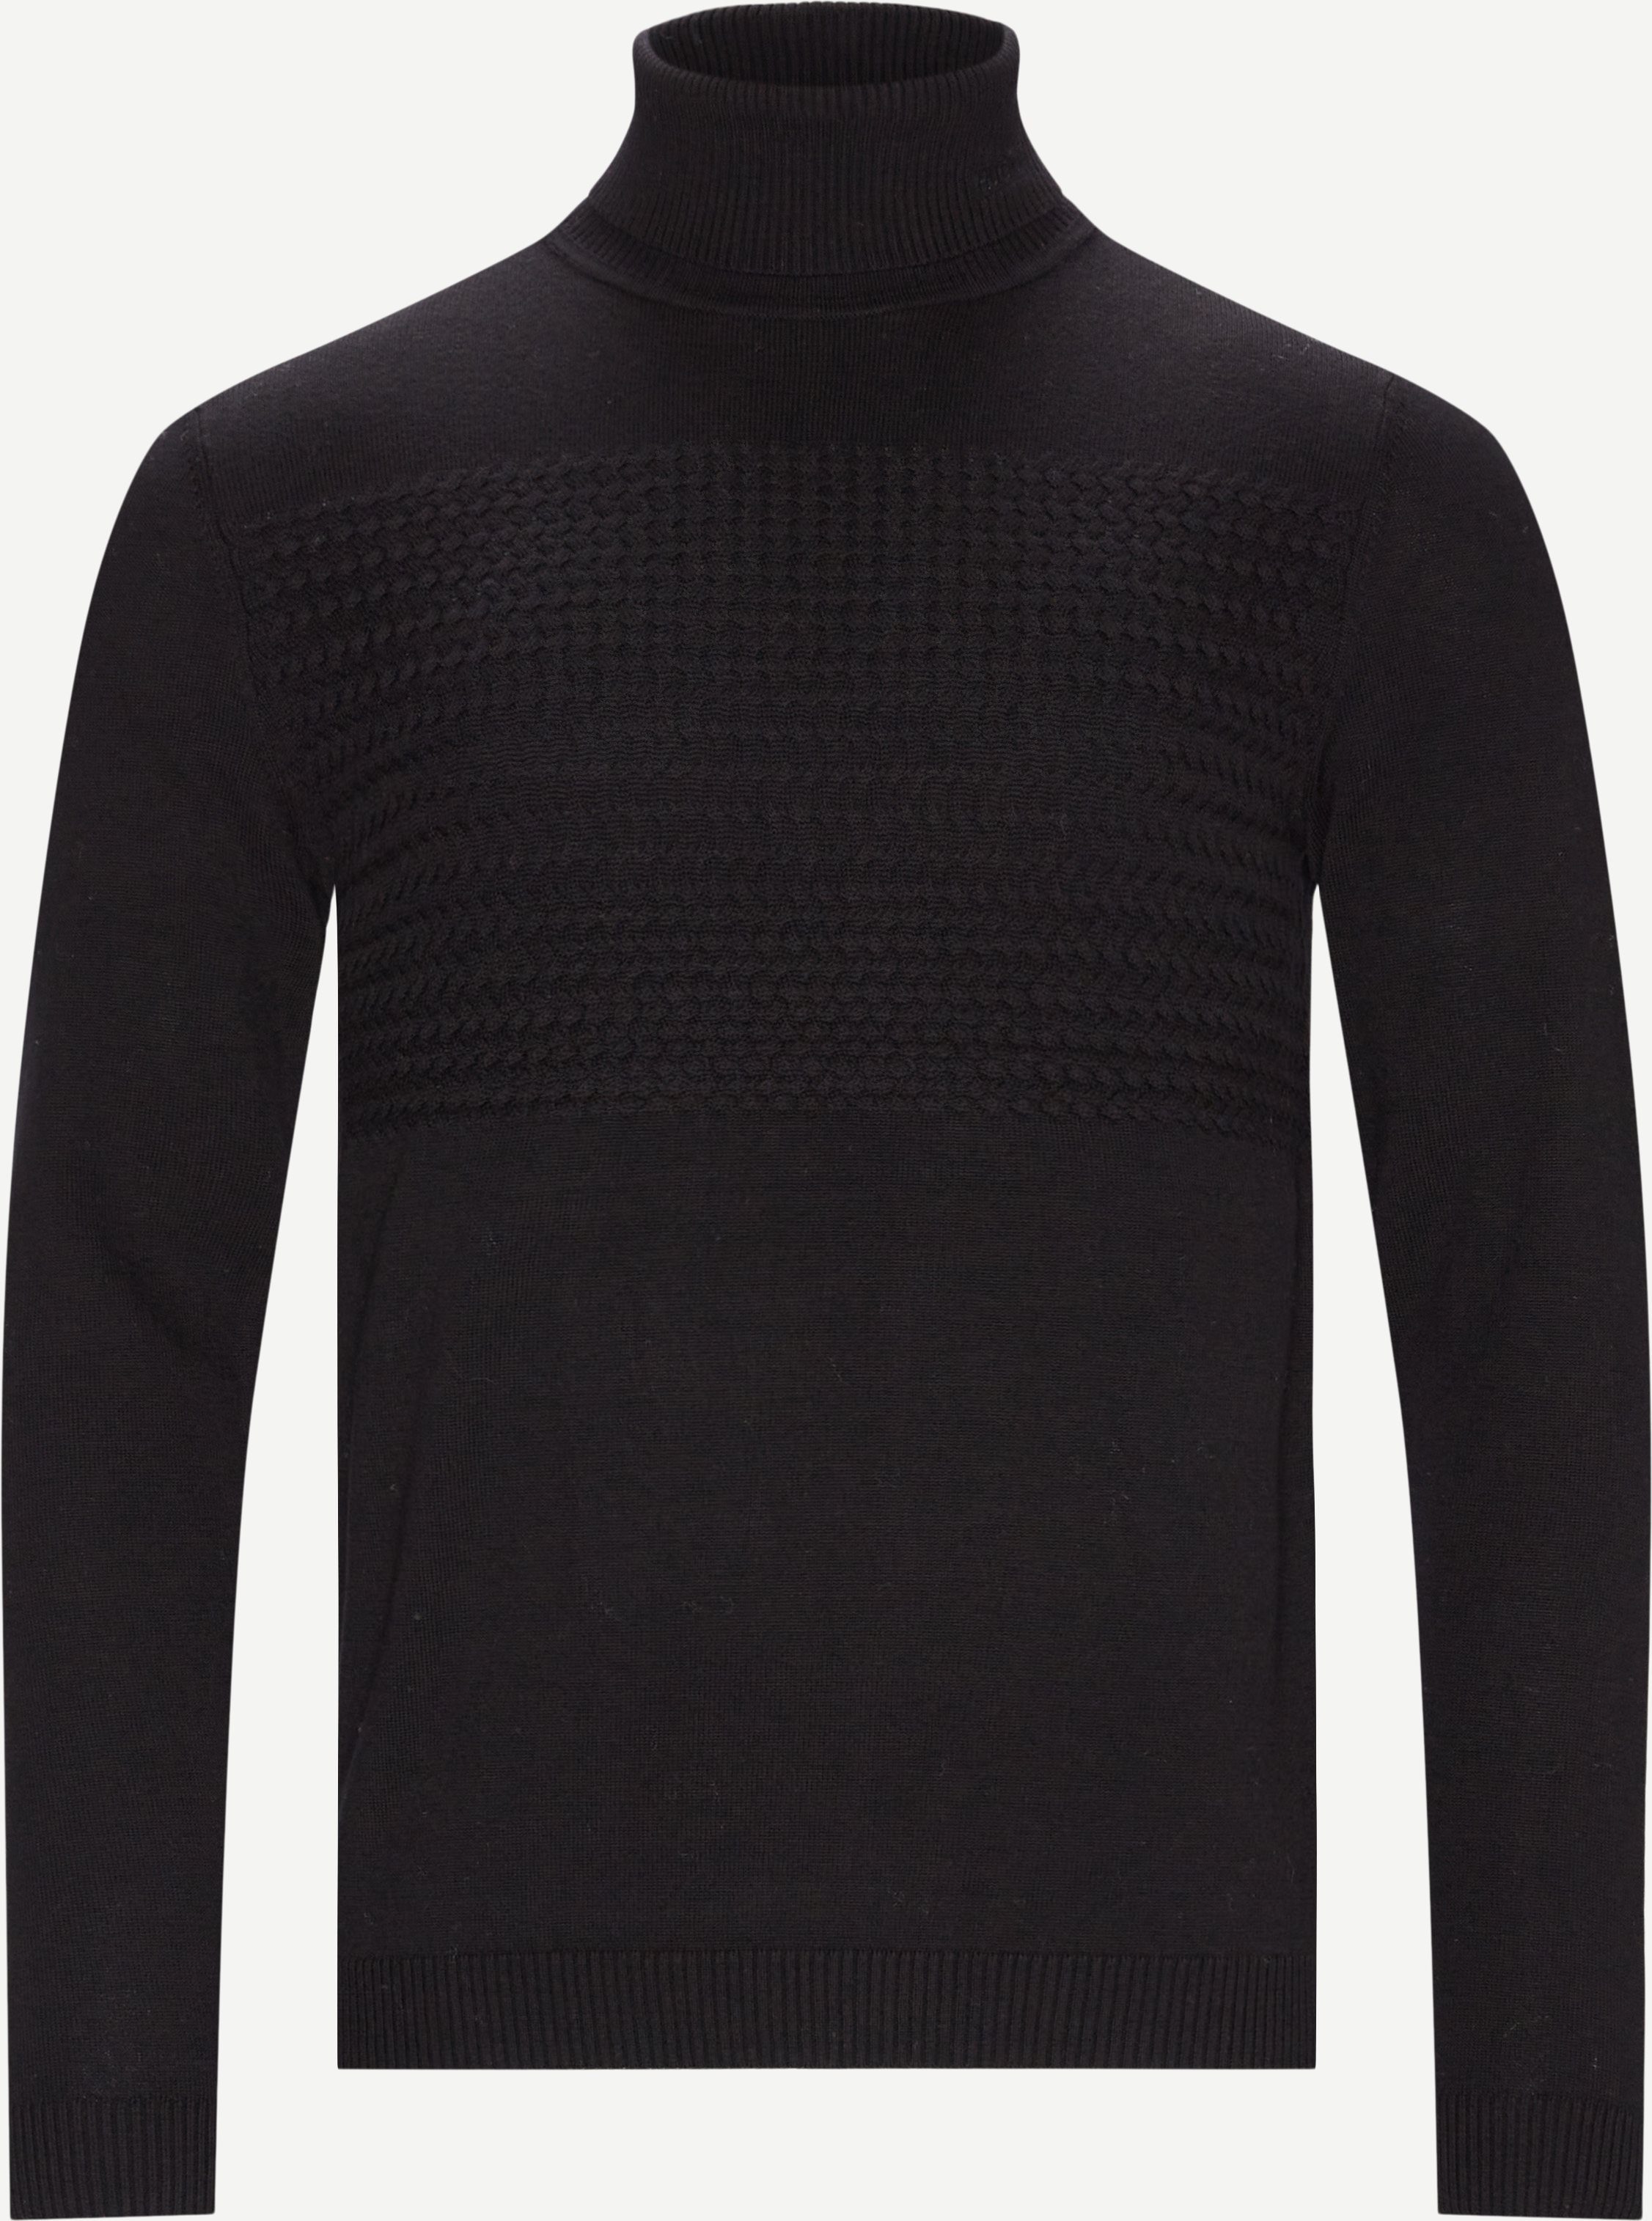 Siseono Roll Collar Knit - Knitwear - Regular fit - Black